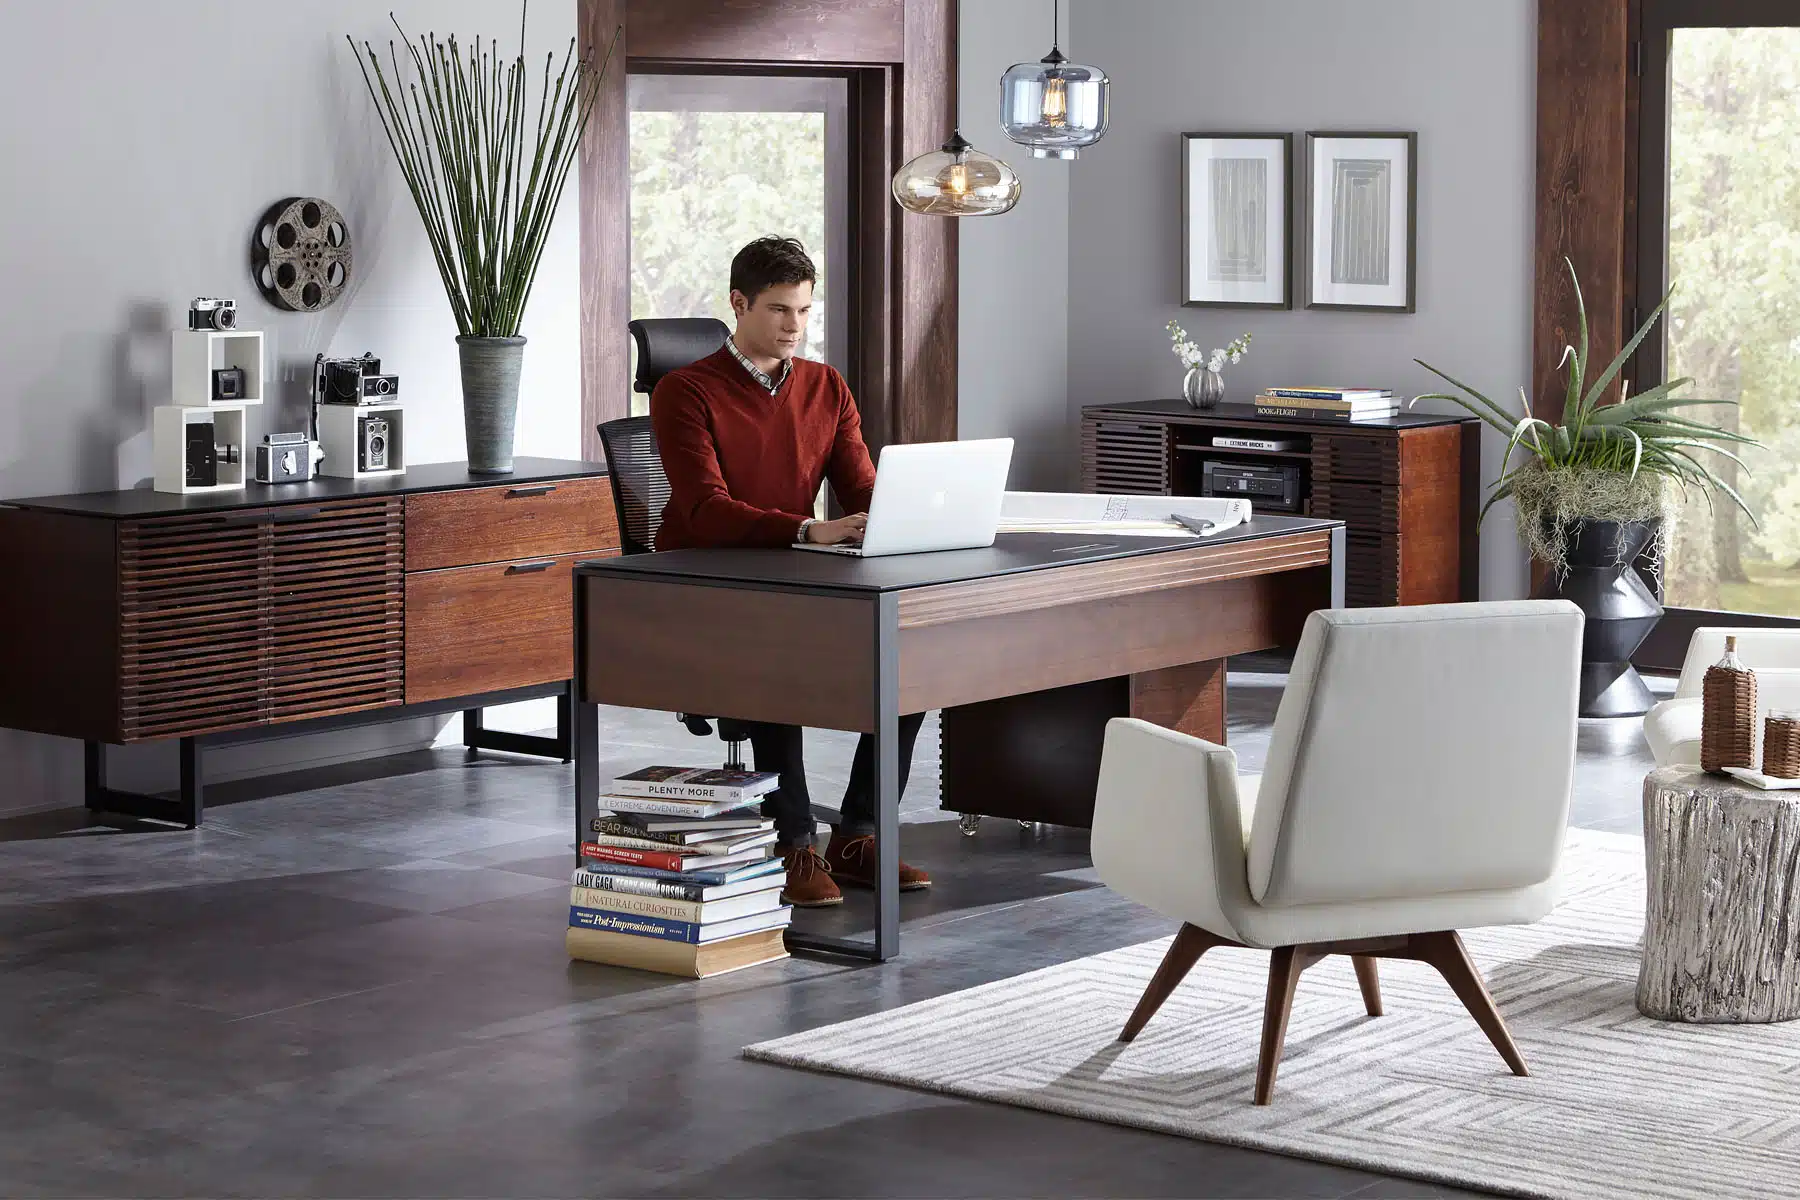 7 Modern Home Office Design Tips - San Francisco Design